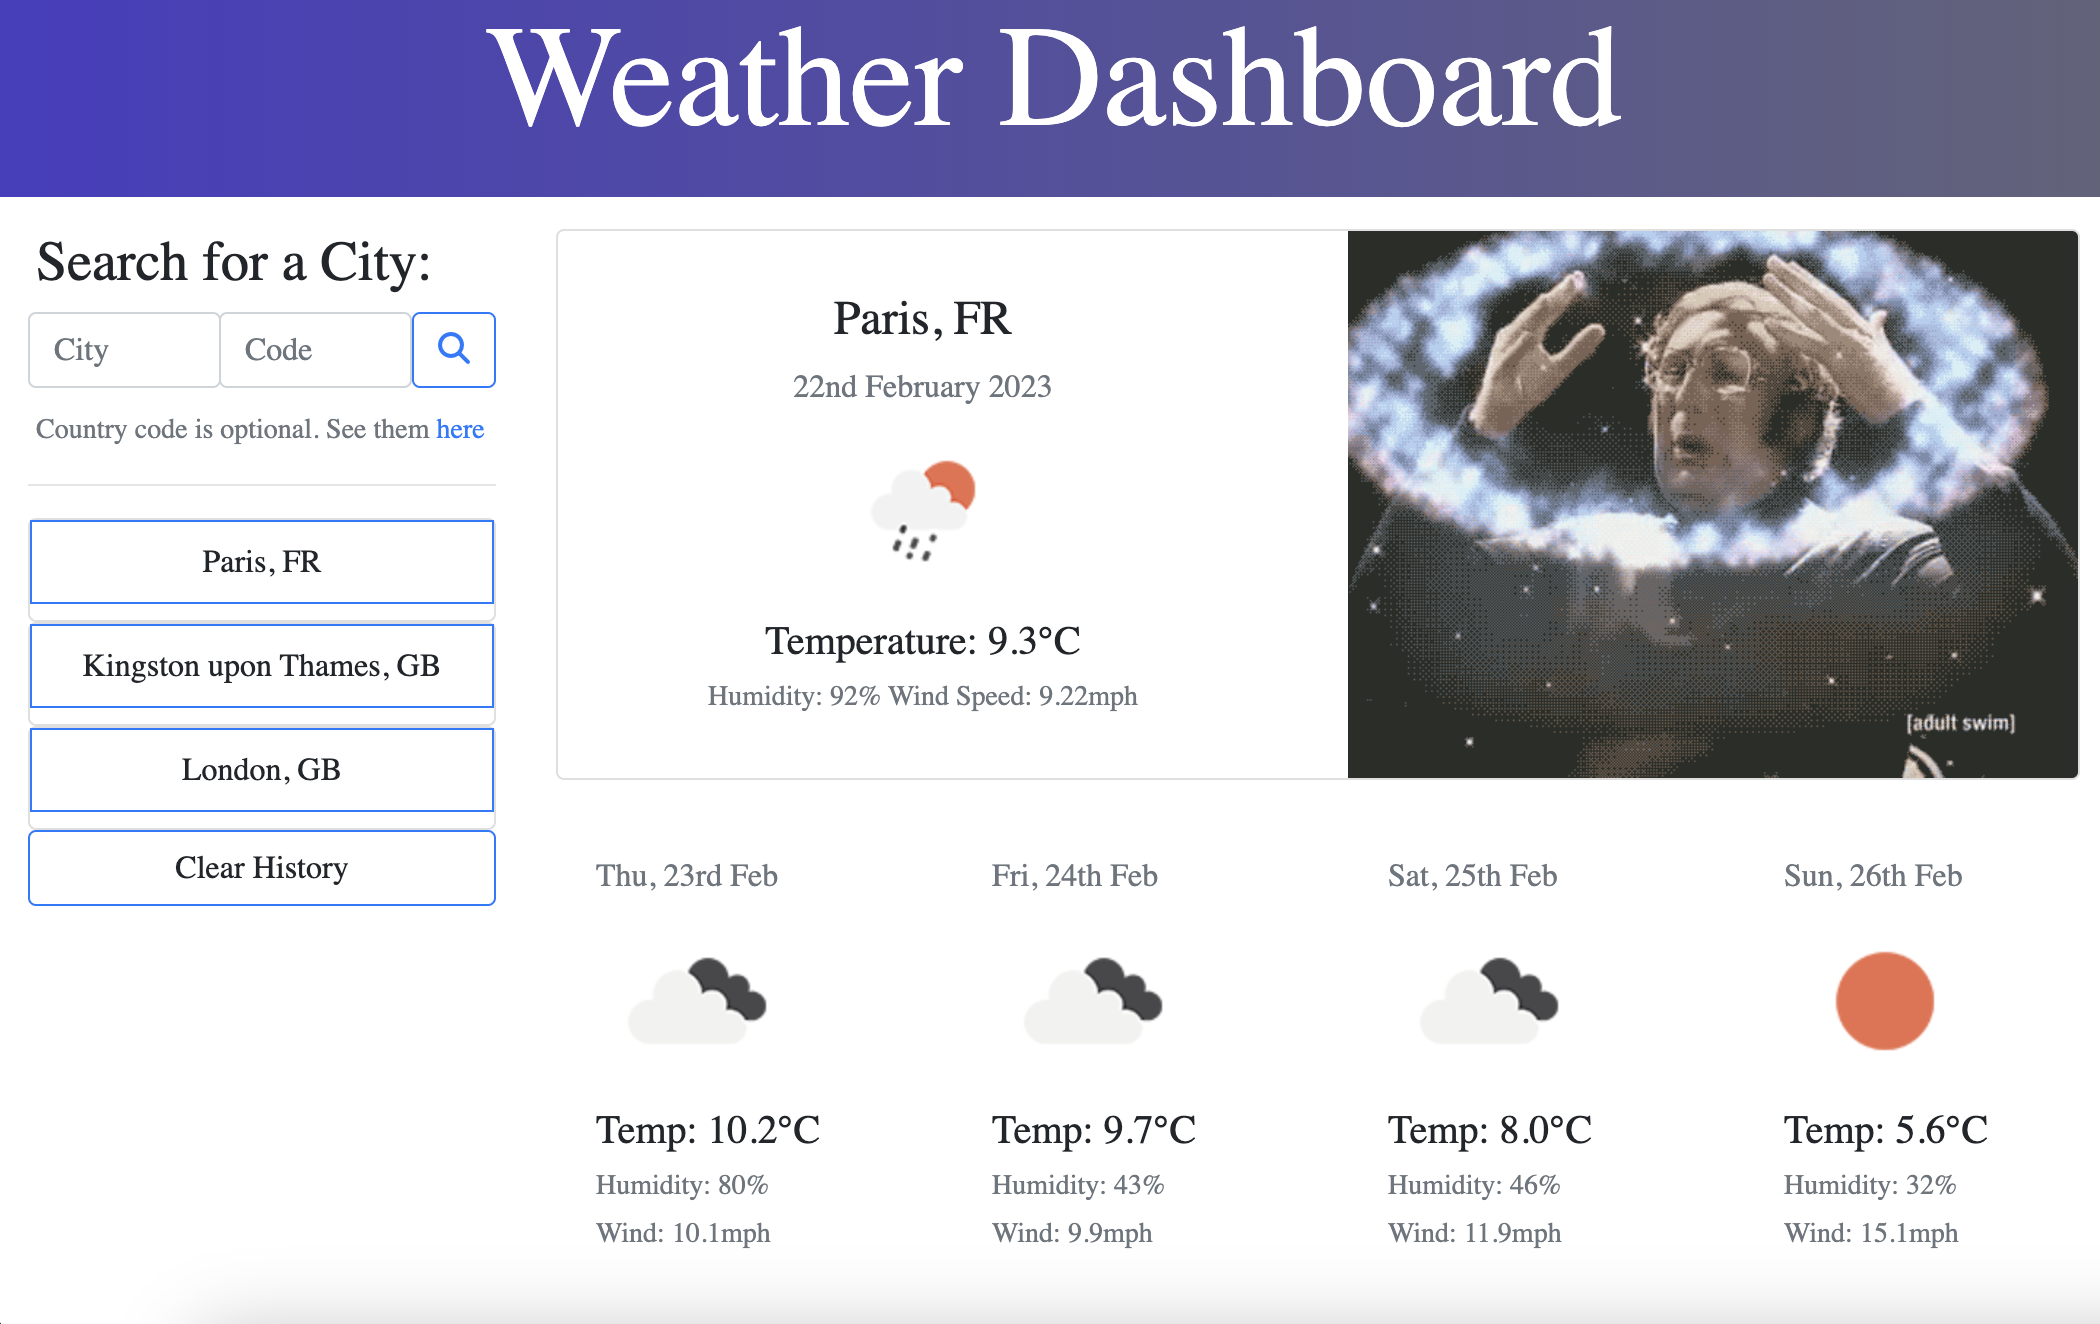 a weather dashboard